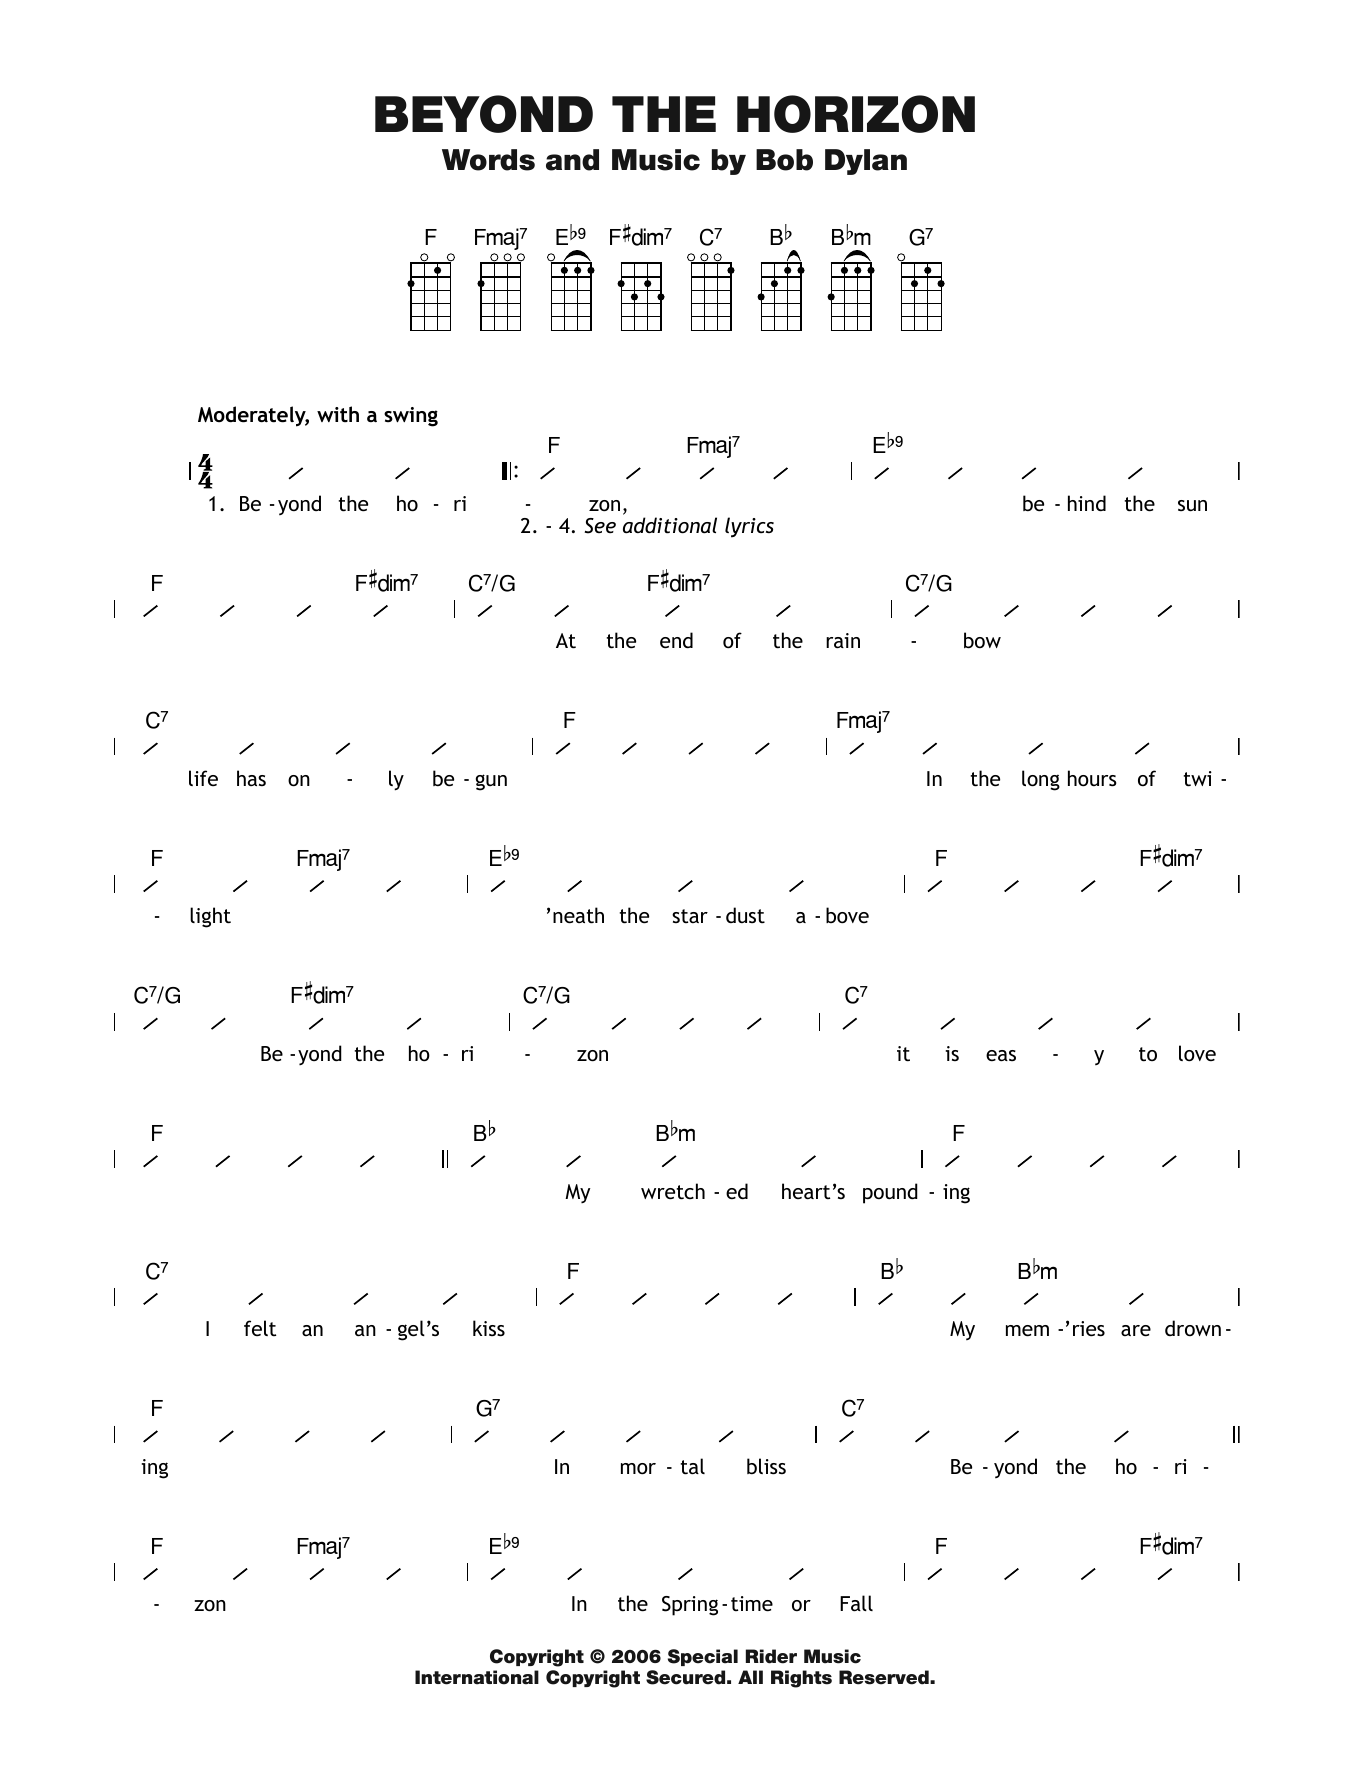 Bob Dylan Beyond The Horizon Sheet Music Notes & Chords for Ukulele with strumming patterns - Download or Print PDF